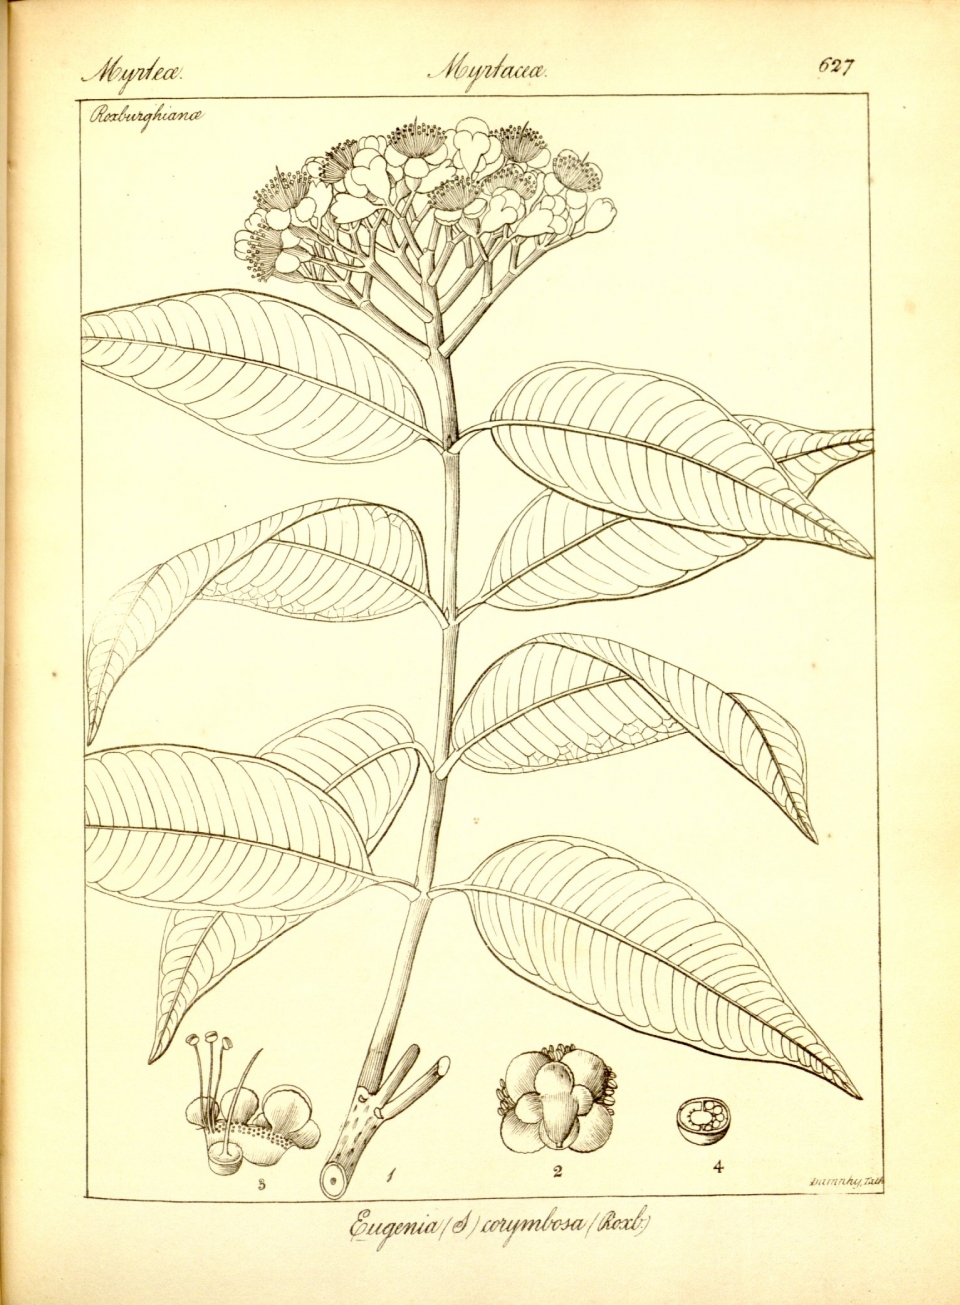 Syzygium pycnanthum